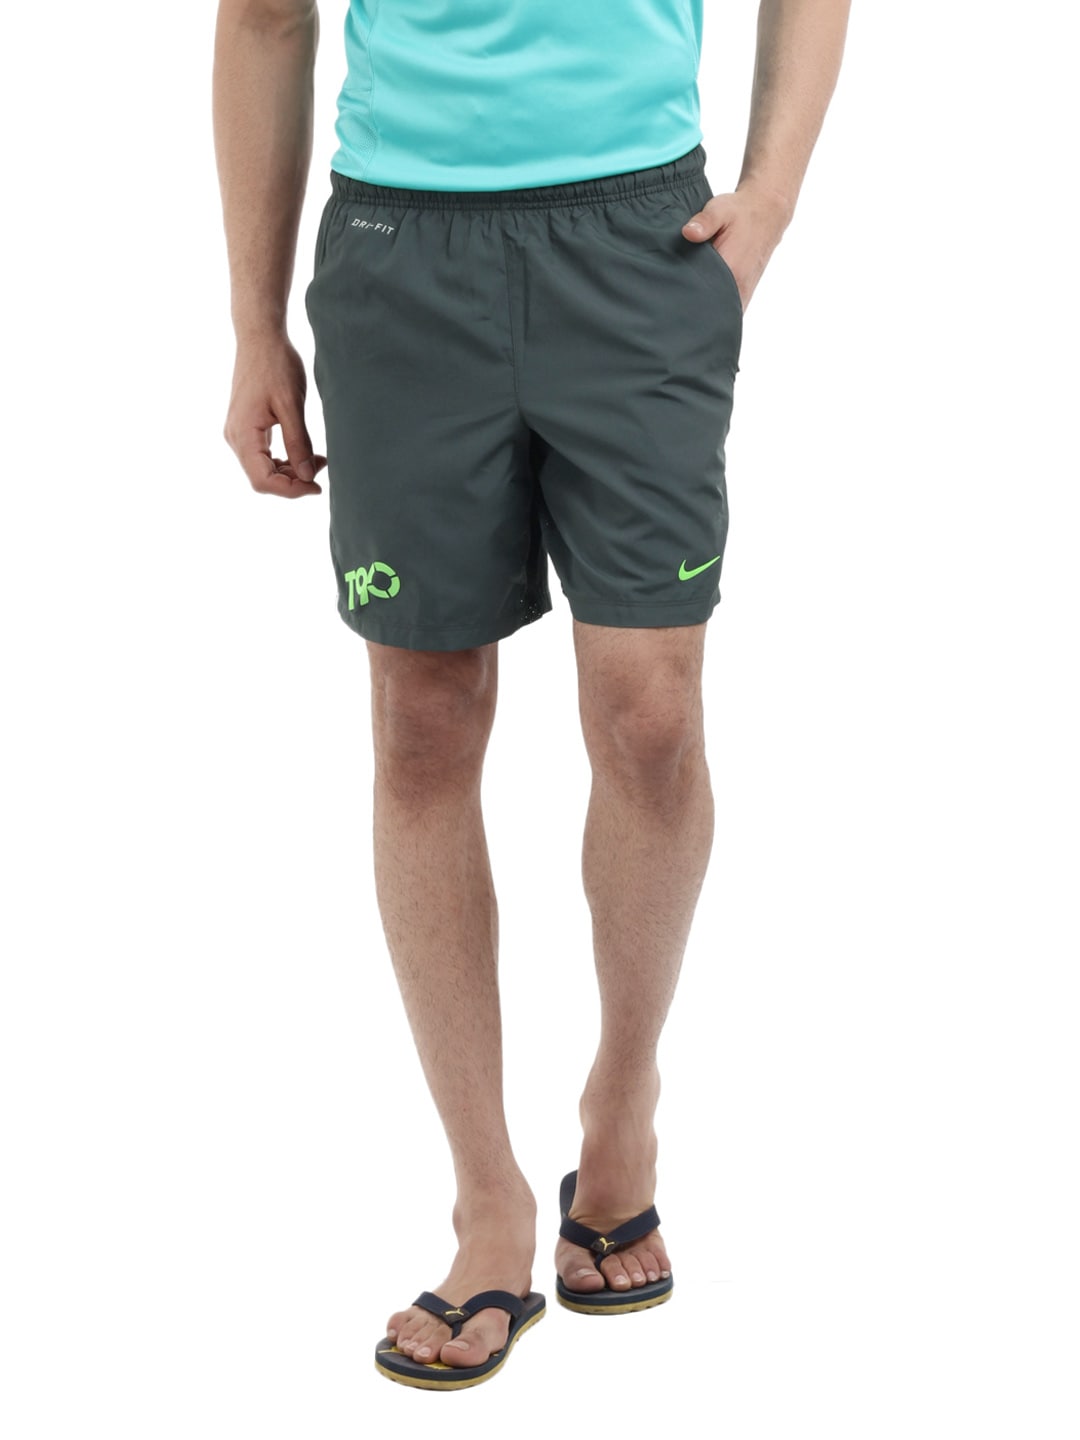 Nike Men's Green Shorts